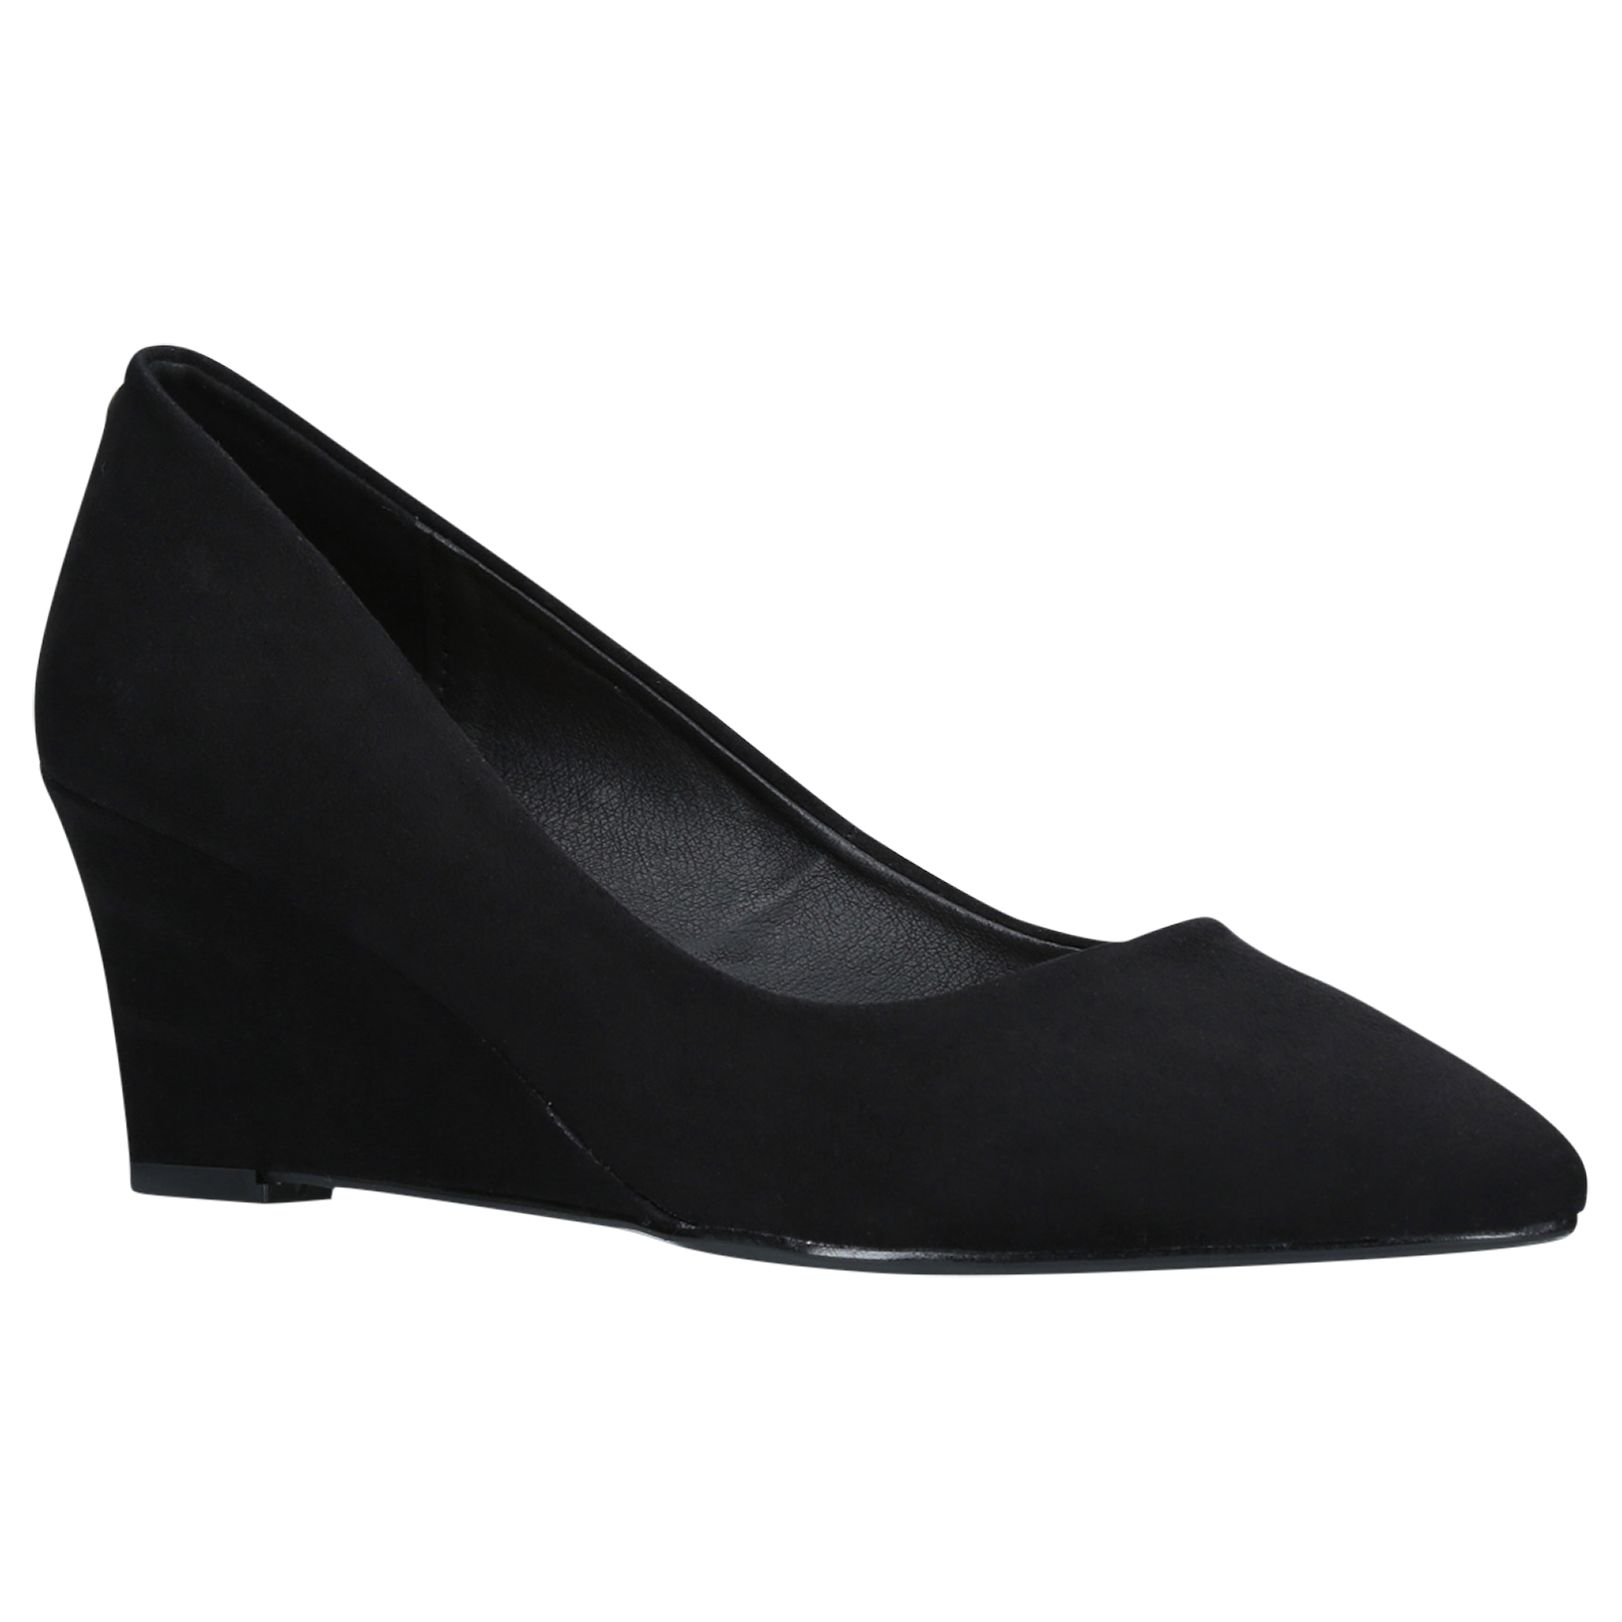 Carvela Kaden Wedge Heel Court Shoes, Black at John Lewis & Partners